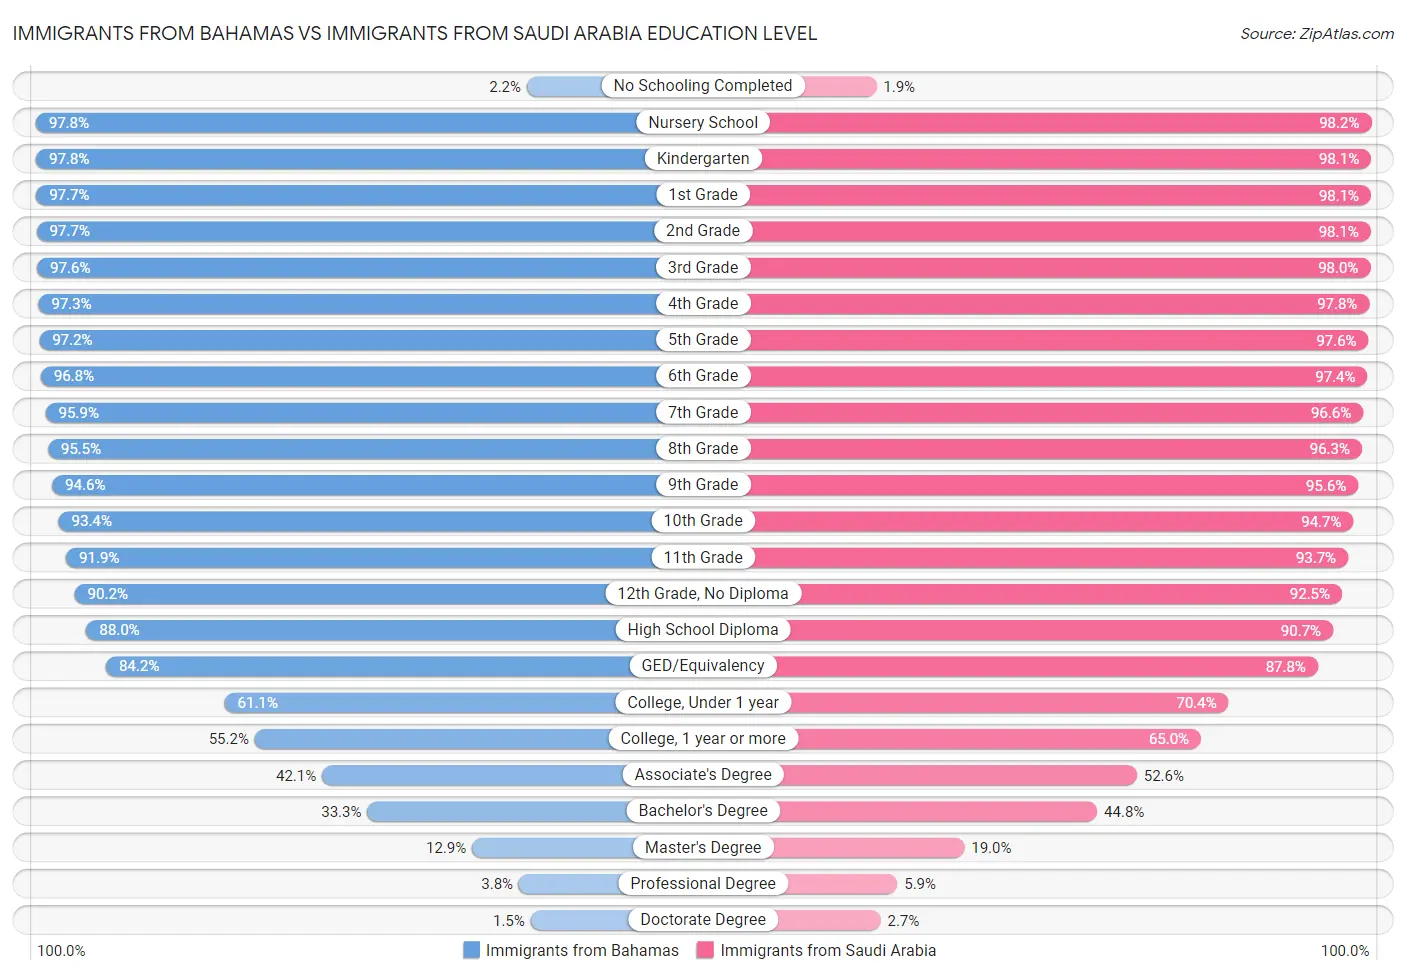 Immigrants from Bahamas vs Immigrants from Saudi Arabia Education Level